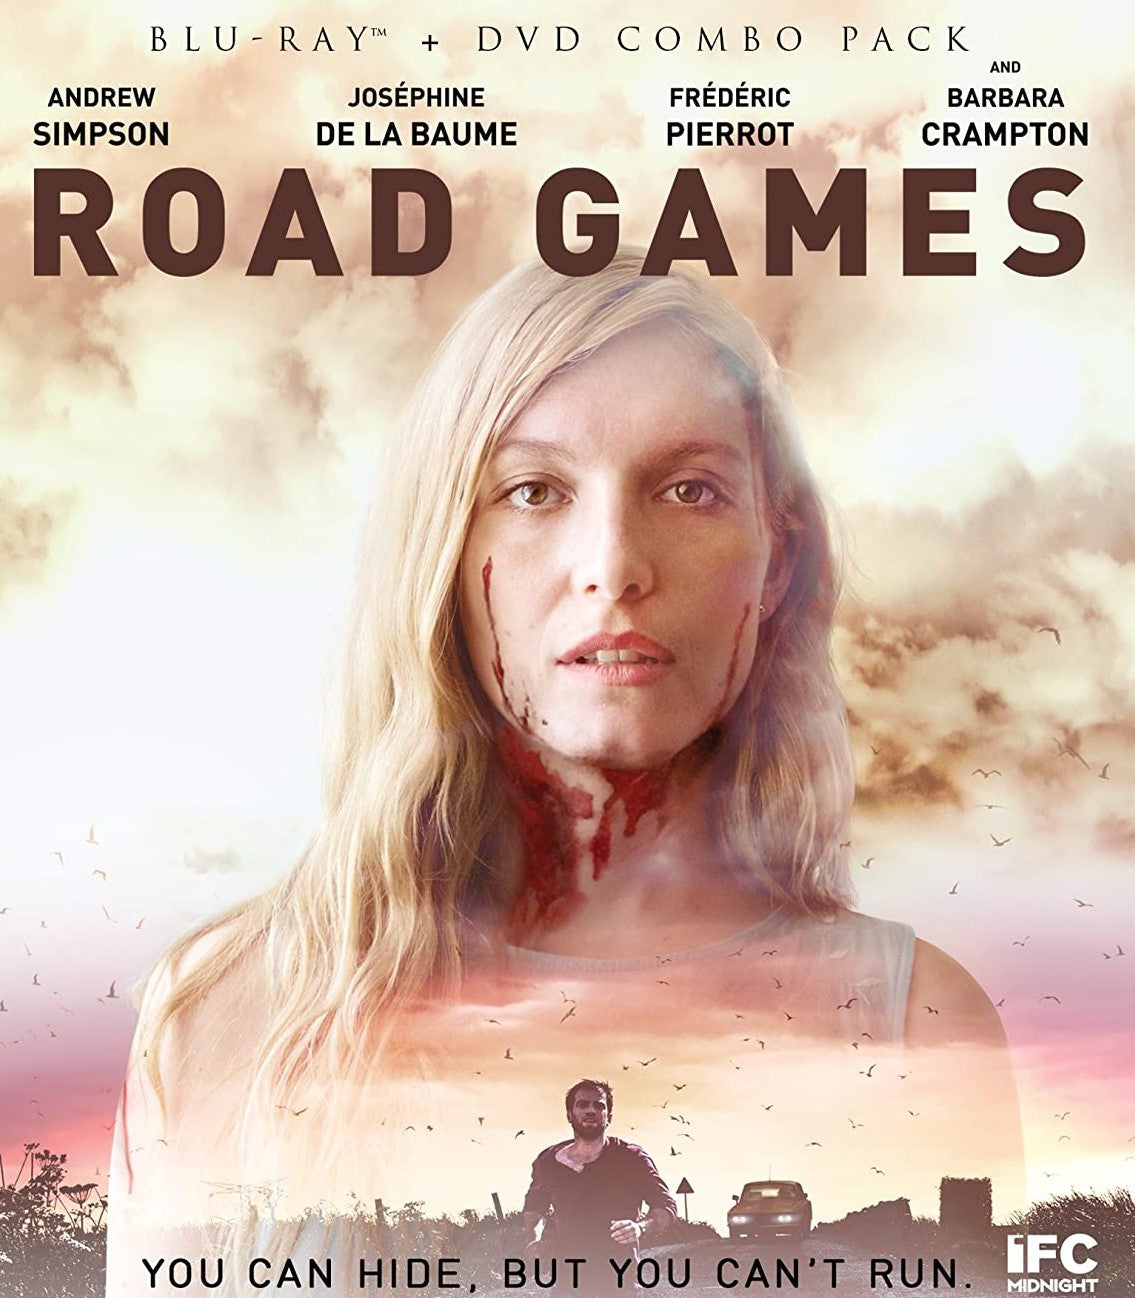 Road Games Blu-Ray/dvd Blu-Ray